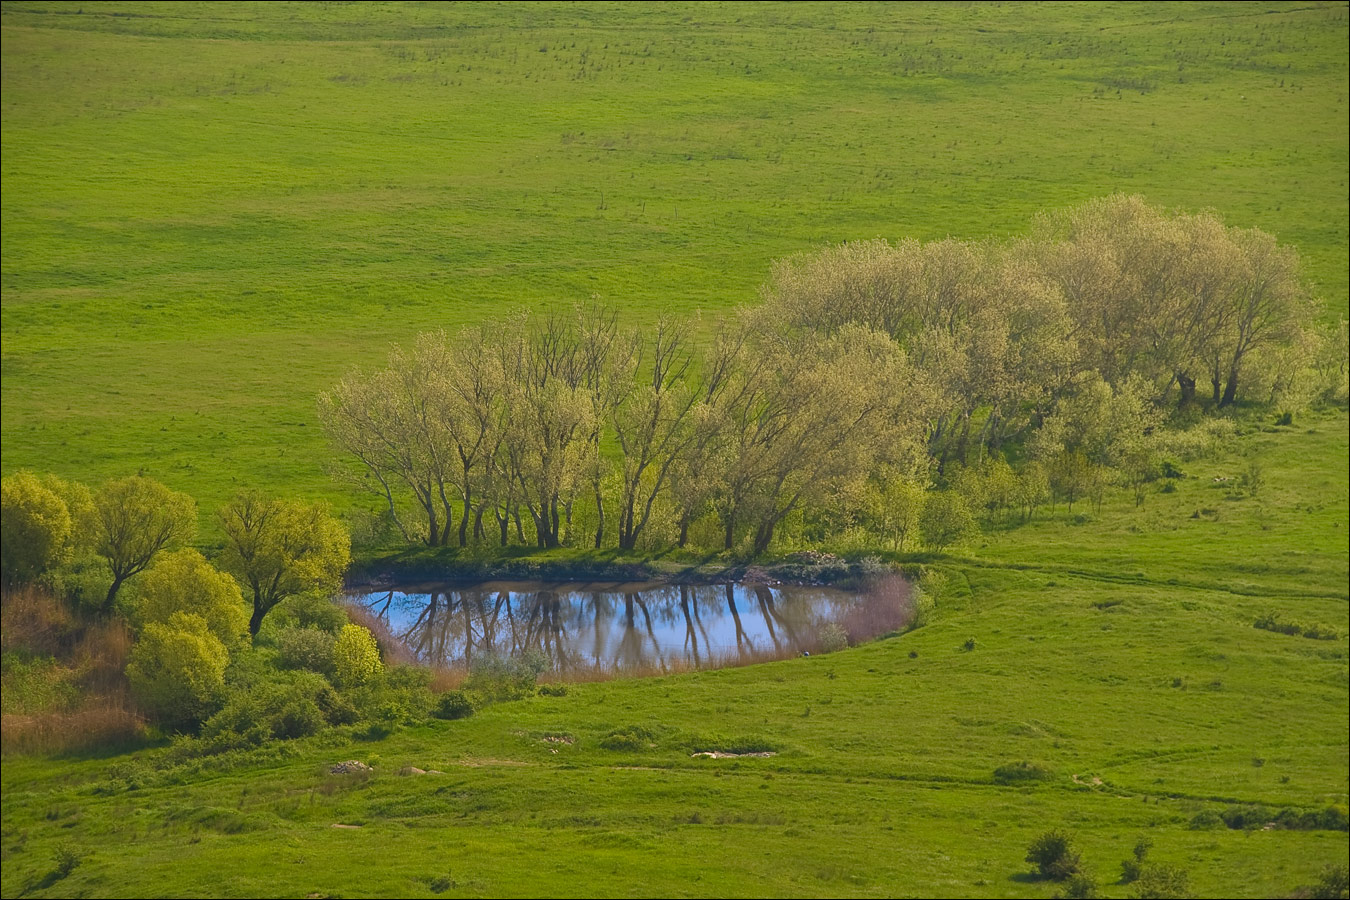 Плато Узун-Сырт (Клементьева), image of landscape/habitat.